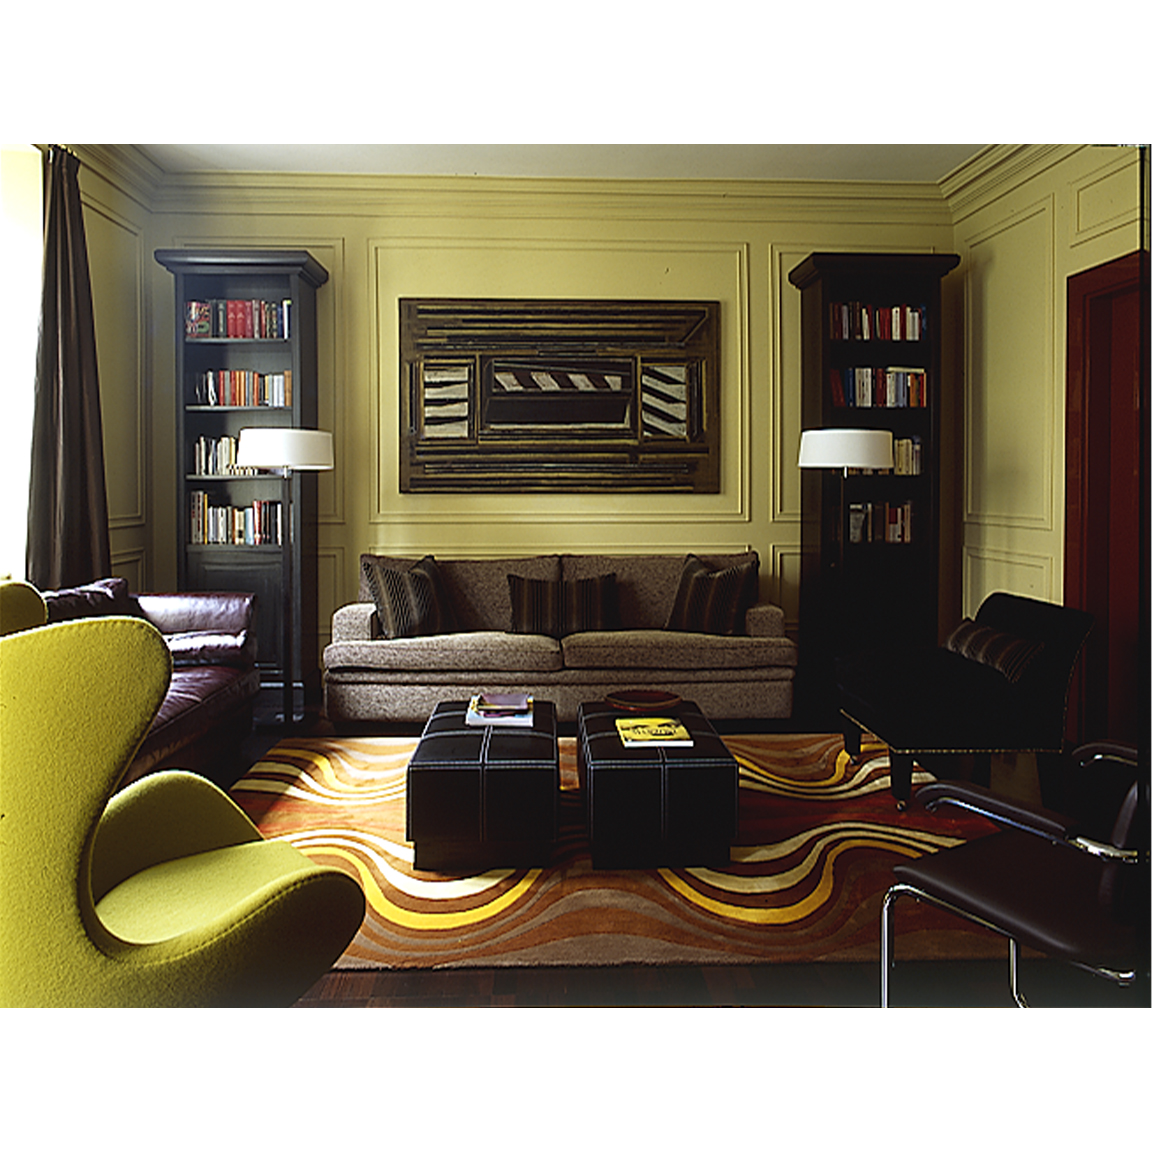 egg armchair - eclectic interior